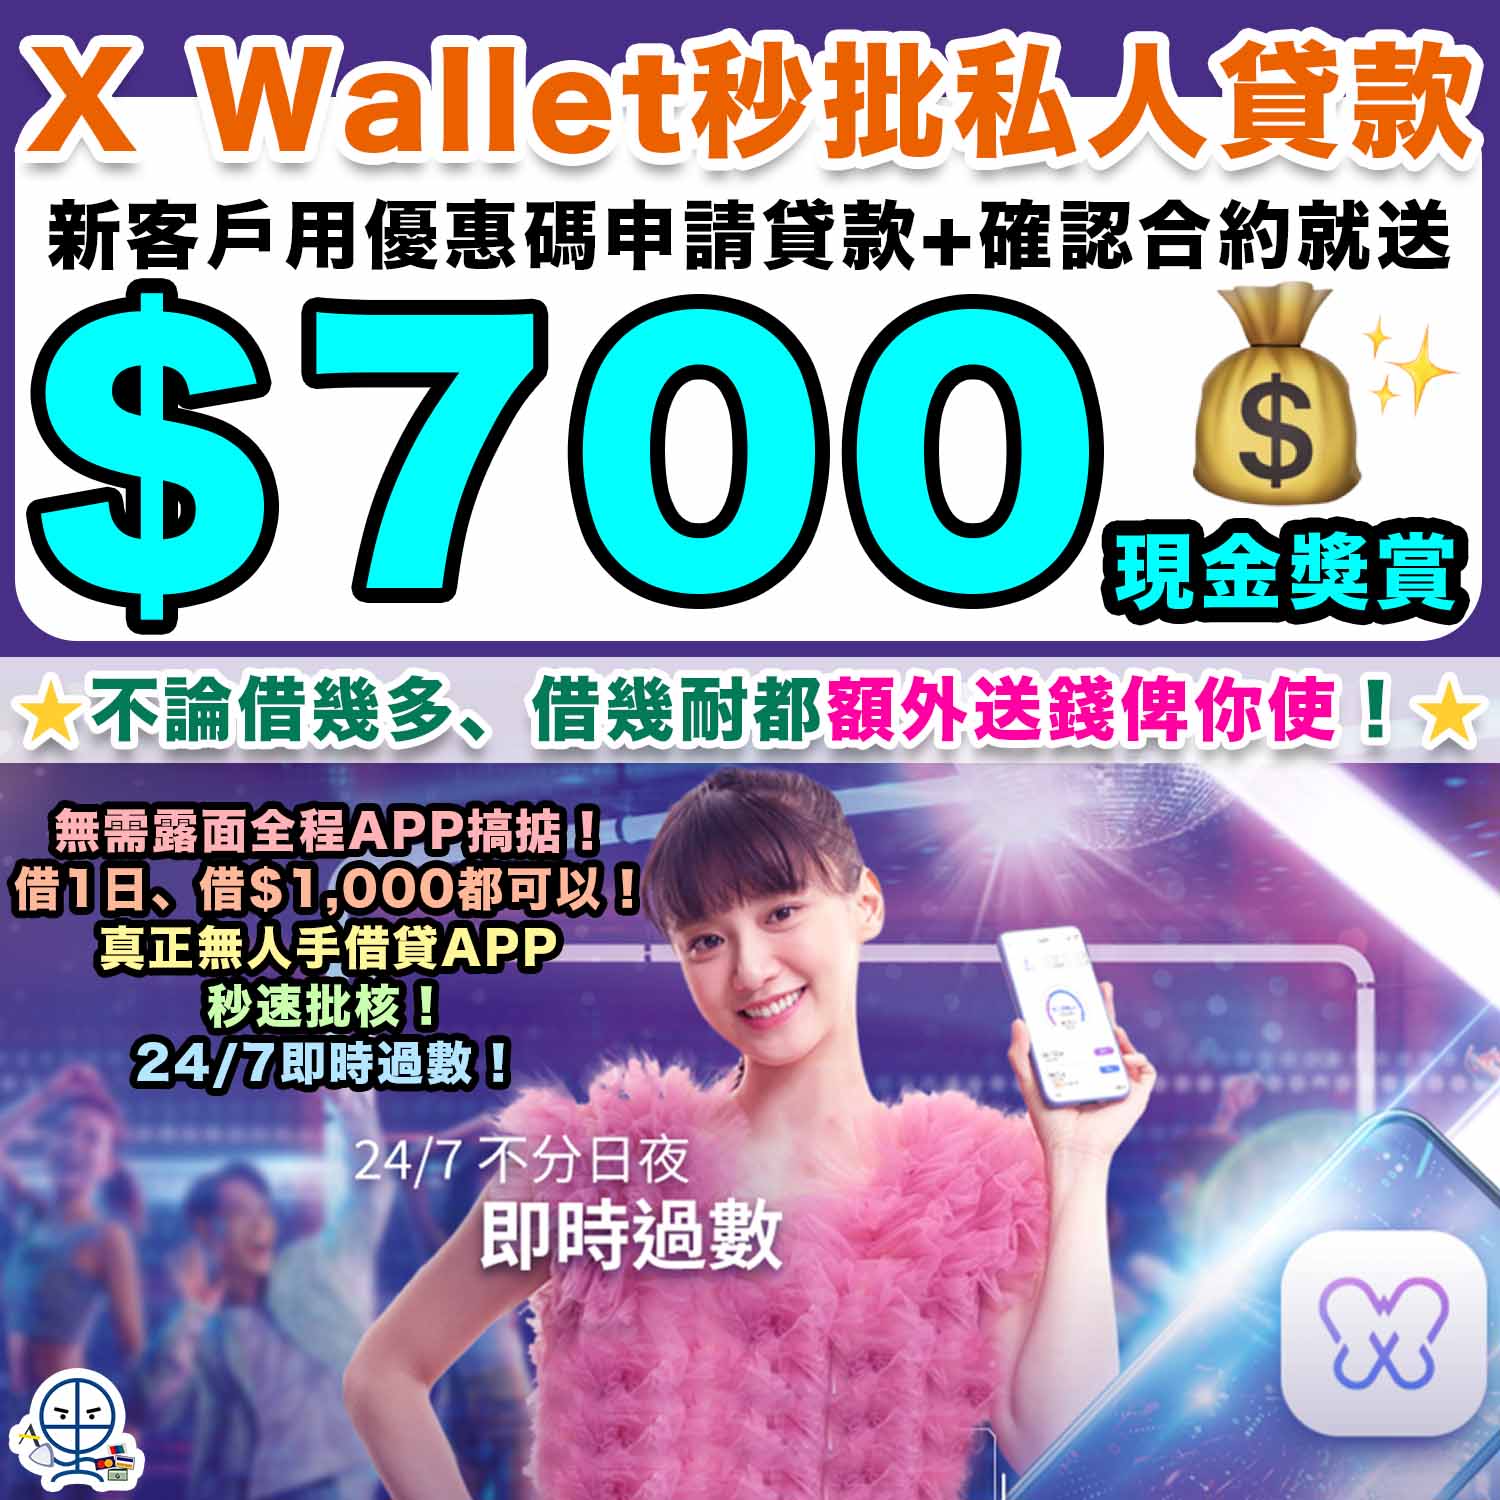 X Wallet手機秒批私人貸款-申請貸款-借貸-X Wallet by Zero Finance Hong Kong Limited